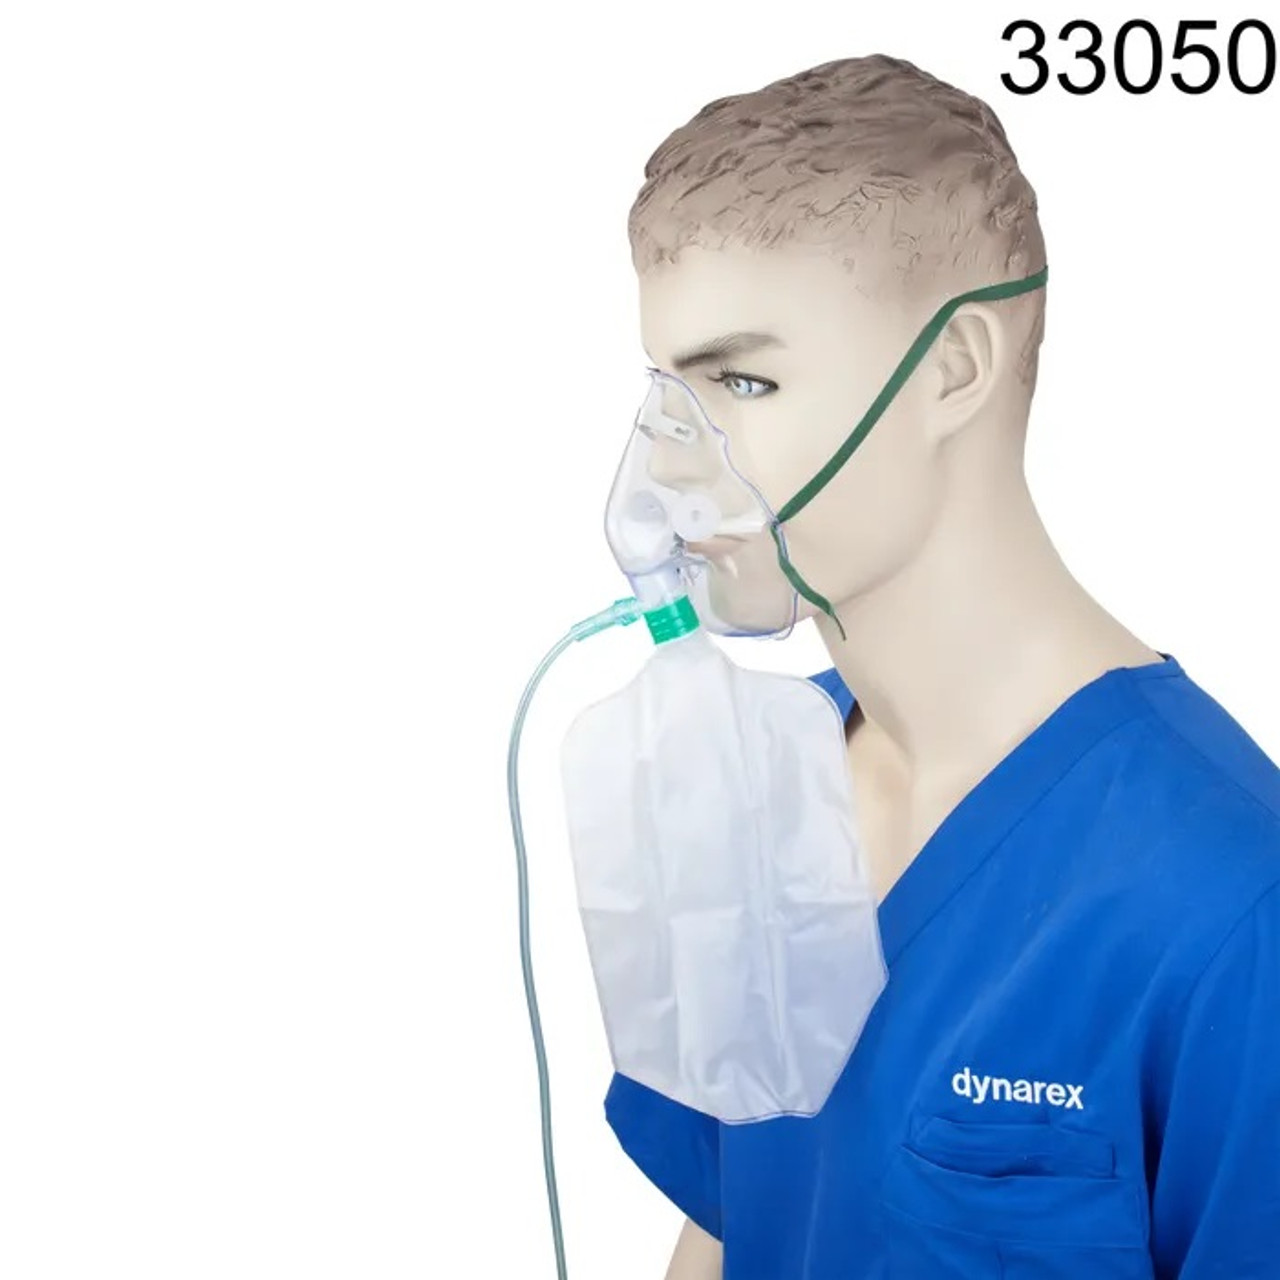 Dynarex 33030 Oxygen Mask Worn